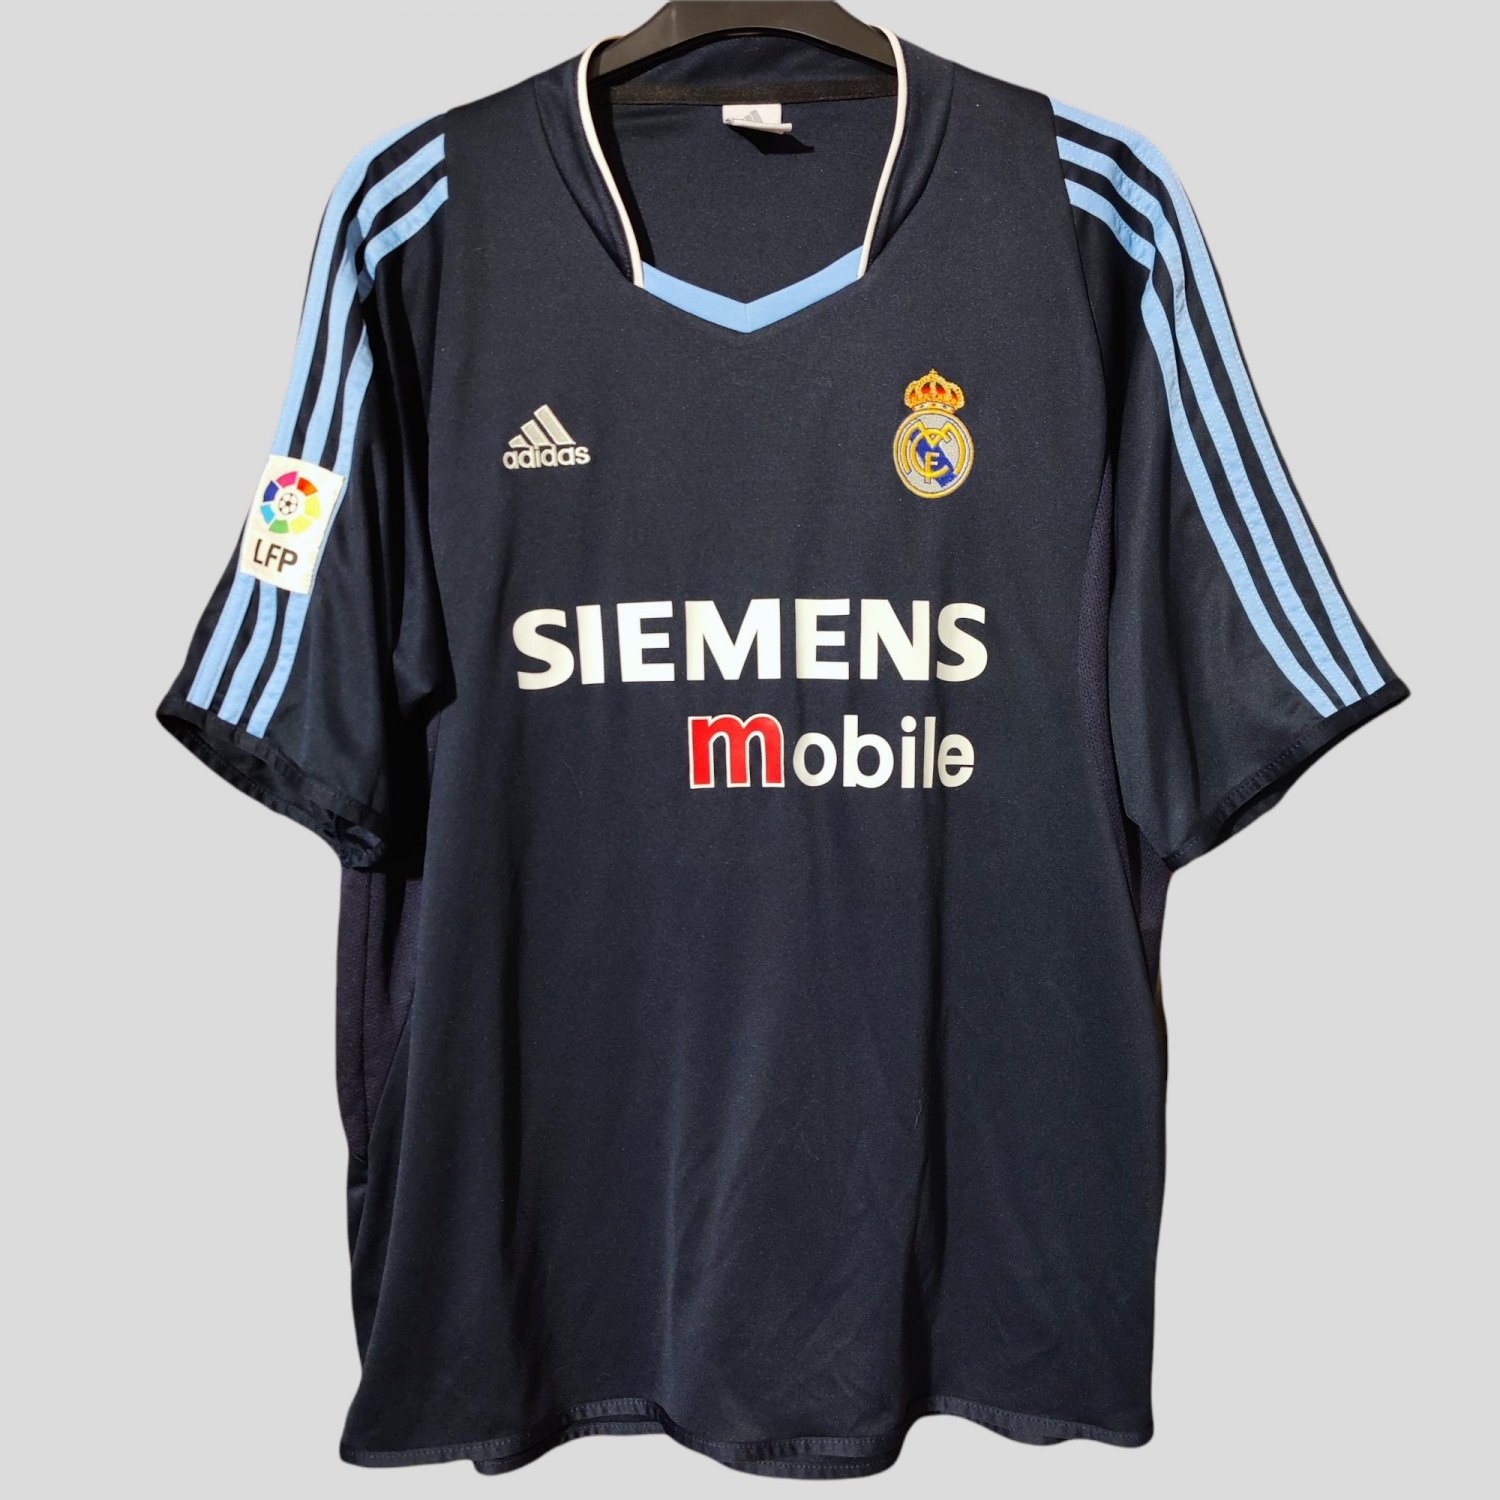 Verzoekschrift veer top Real Madrid Away football shirt 2003 - 2004. Sponsored by Siemens